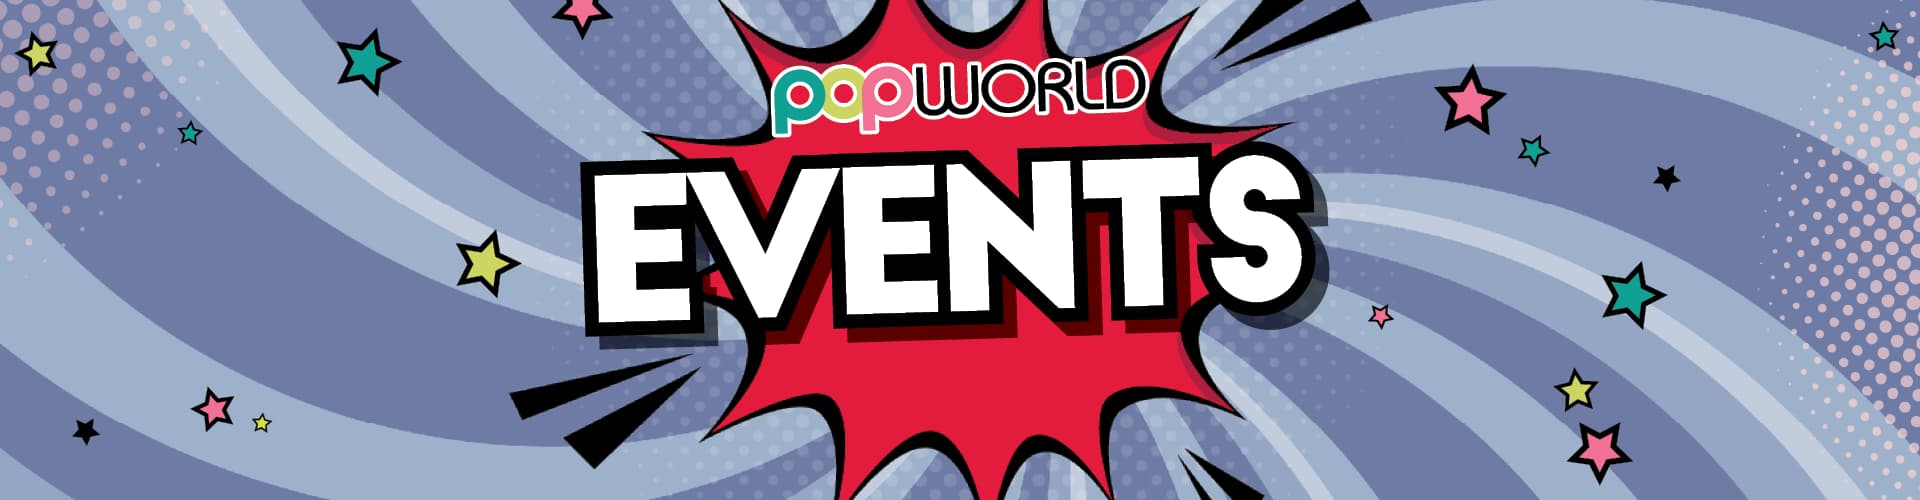 Events at Popworld Wolverhampton